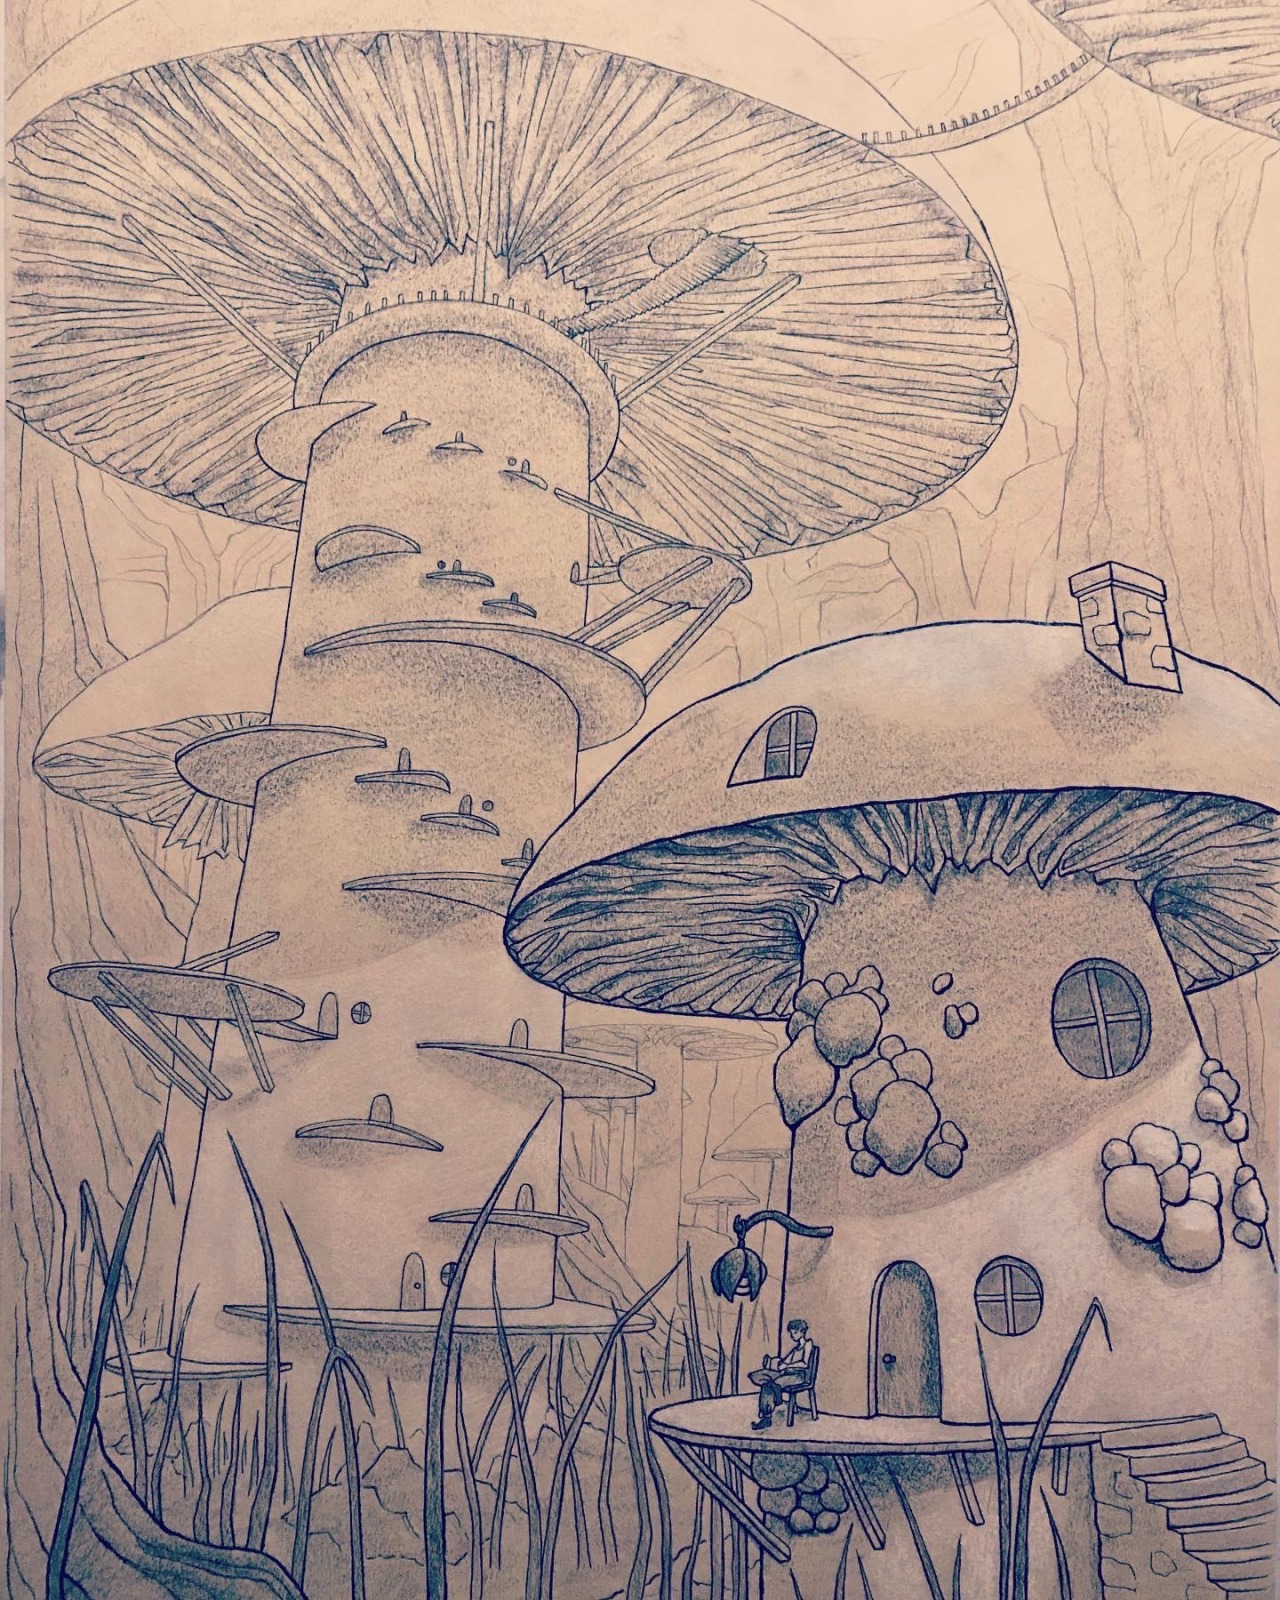 doodlethezen:You guys like mushroom houses right? 